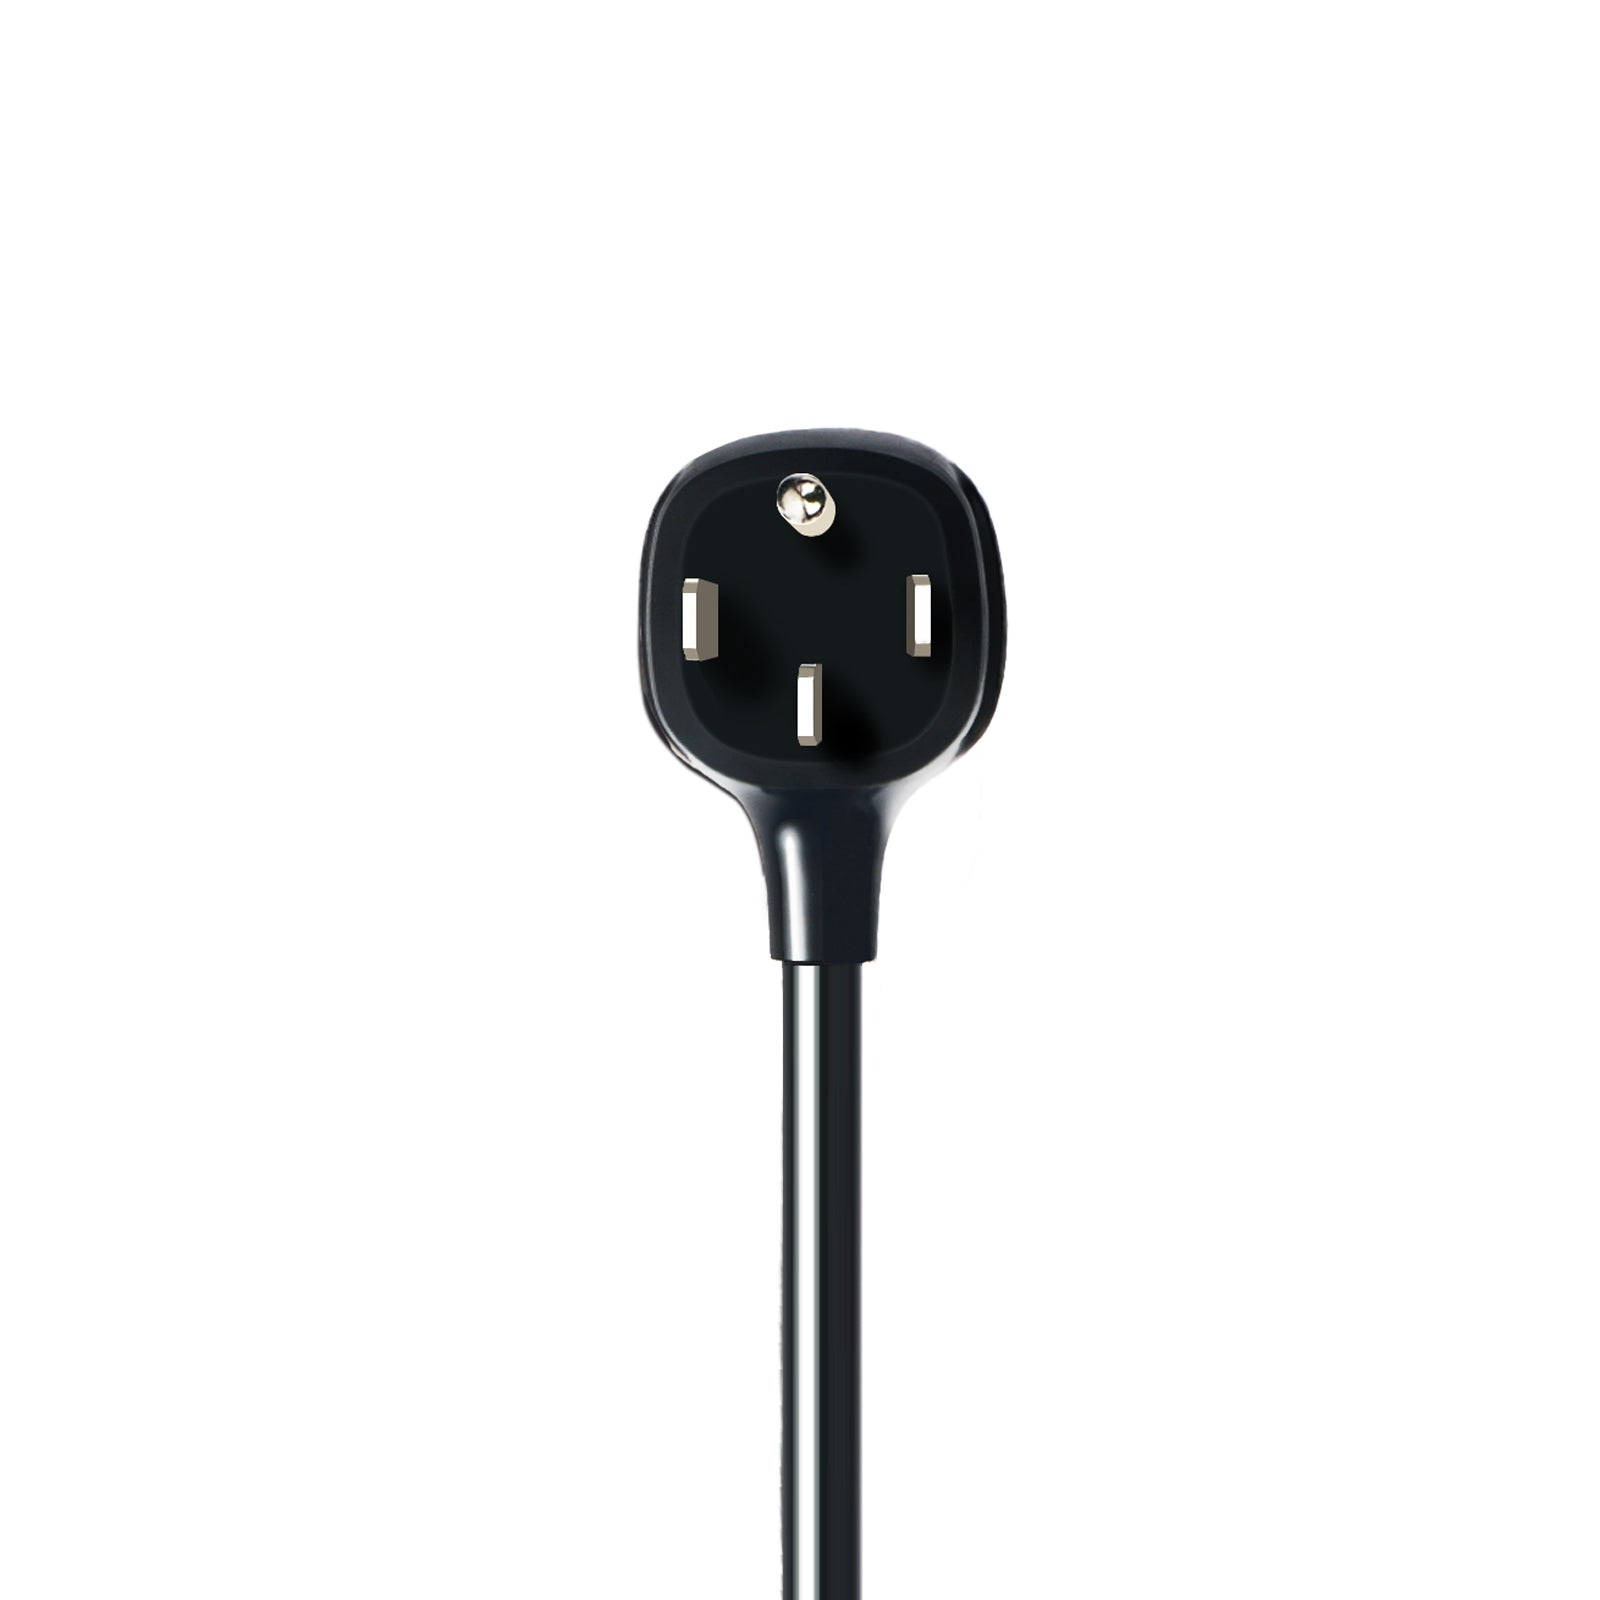 LENZ EVSE NEMA 14-50 plug fits into 240 V receptacle, same outlet used by household dryer